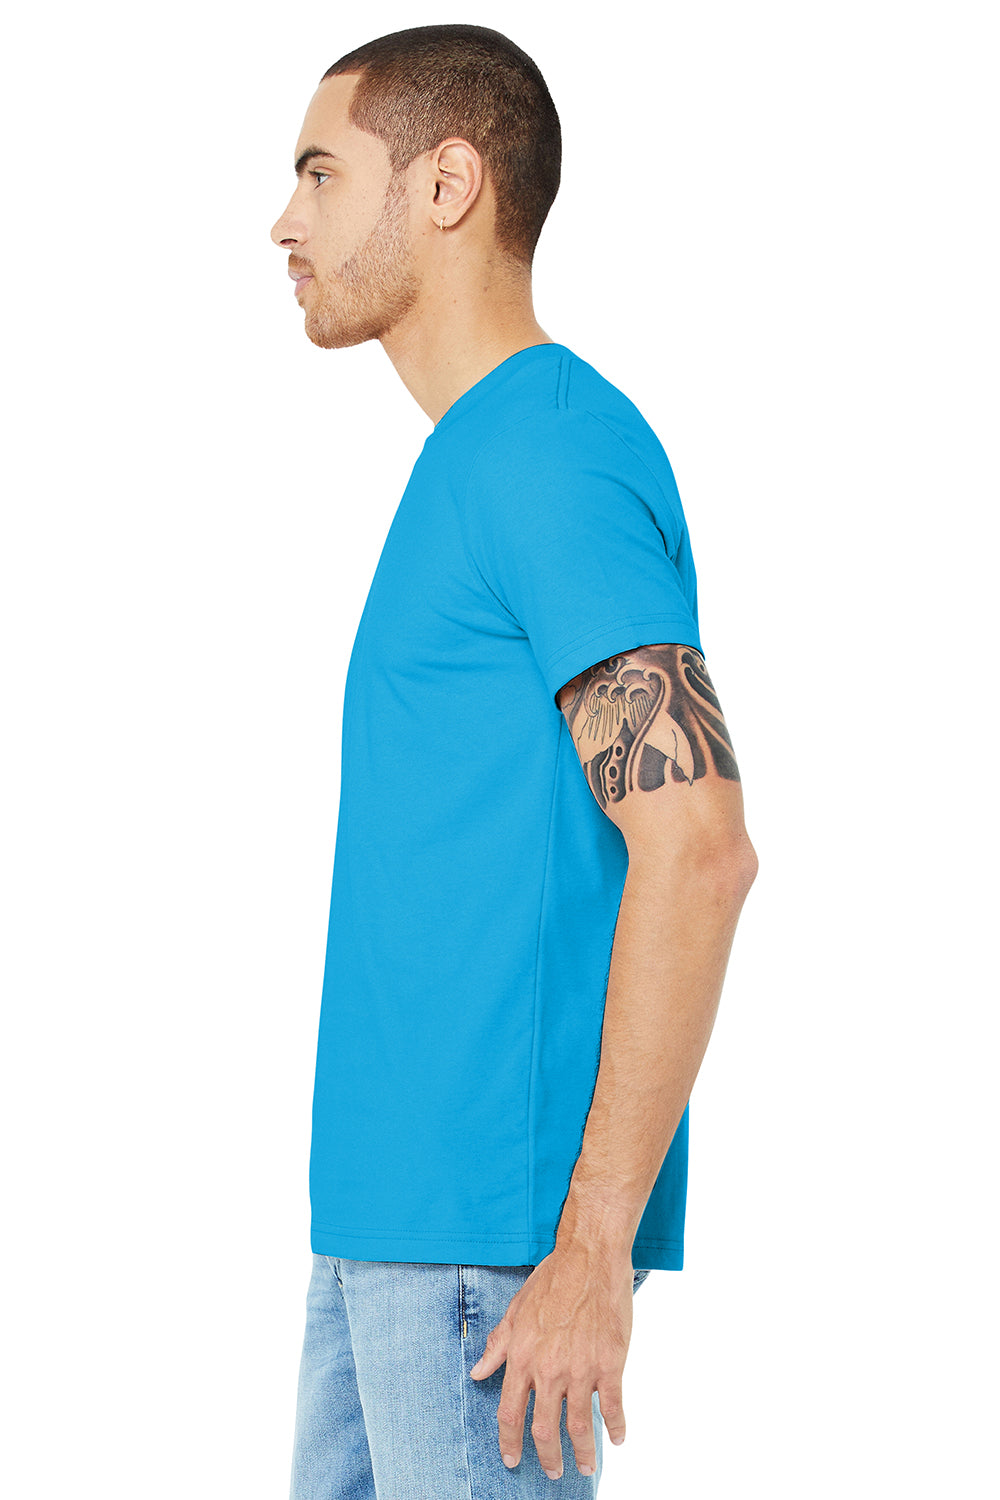 Bella + Canvas BC3001/3001C Mens Jersey Short Sleeve Crewneck T-Shirt Turquoise Blue Model Side